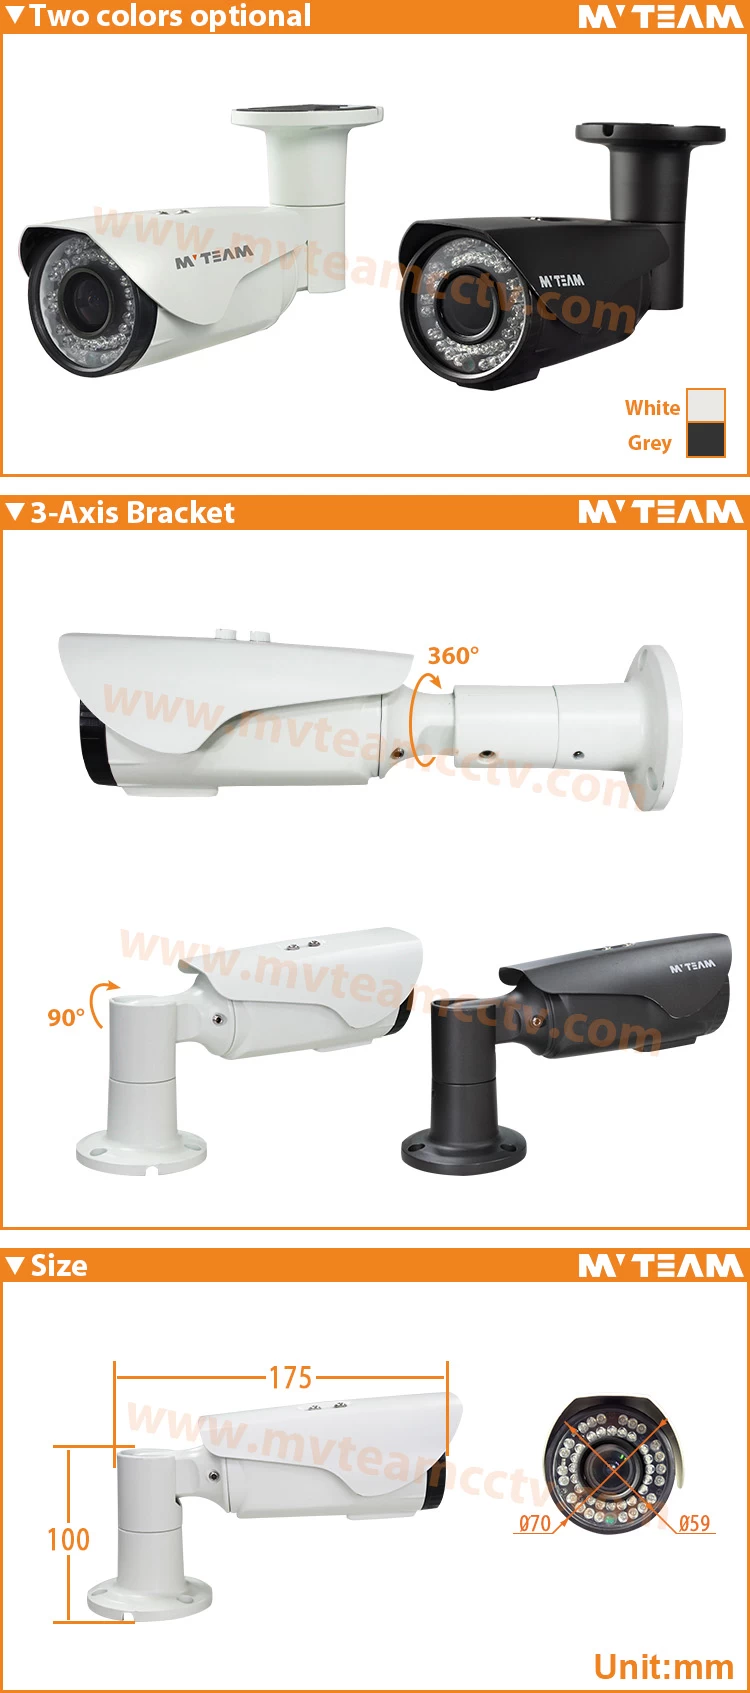 3MP 2048*1536 Resolution Color Waterproof varifocal ir bullet camera(MVT-AH21F)